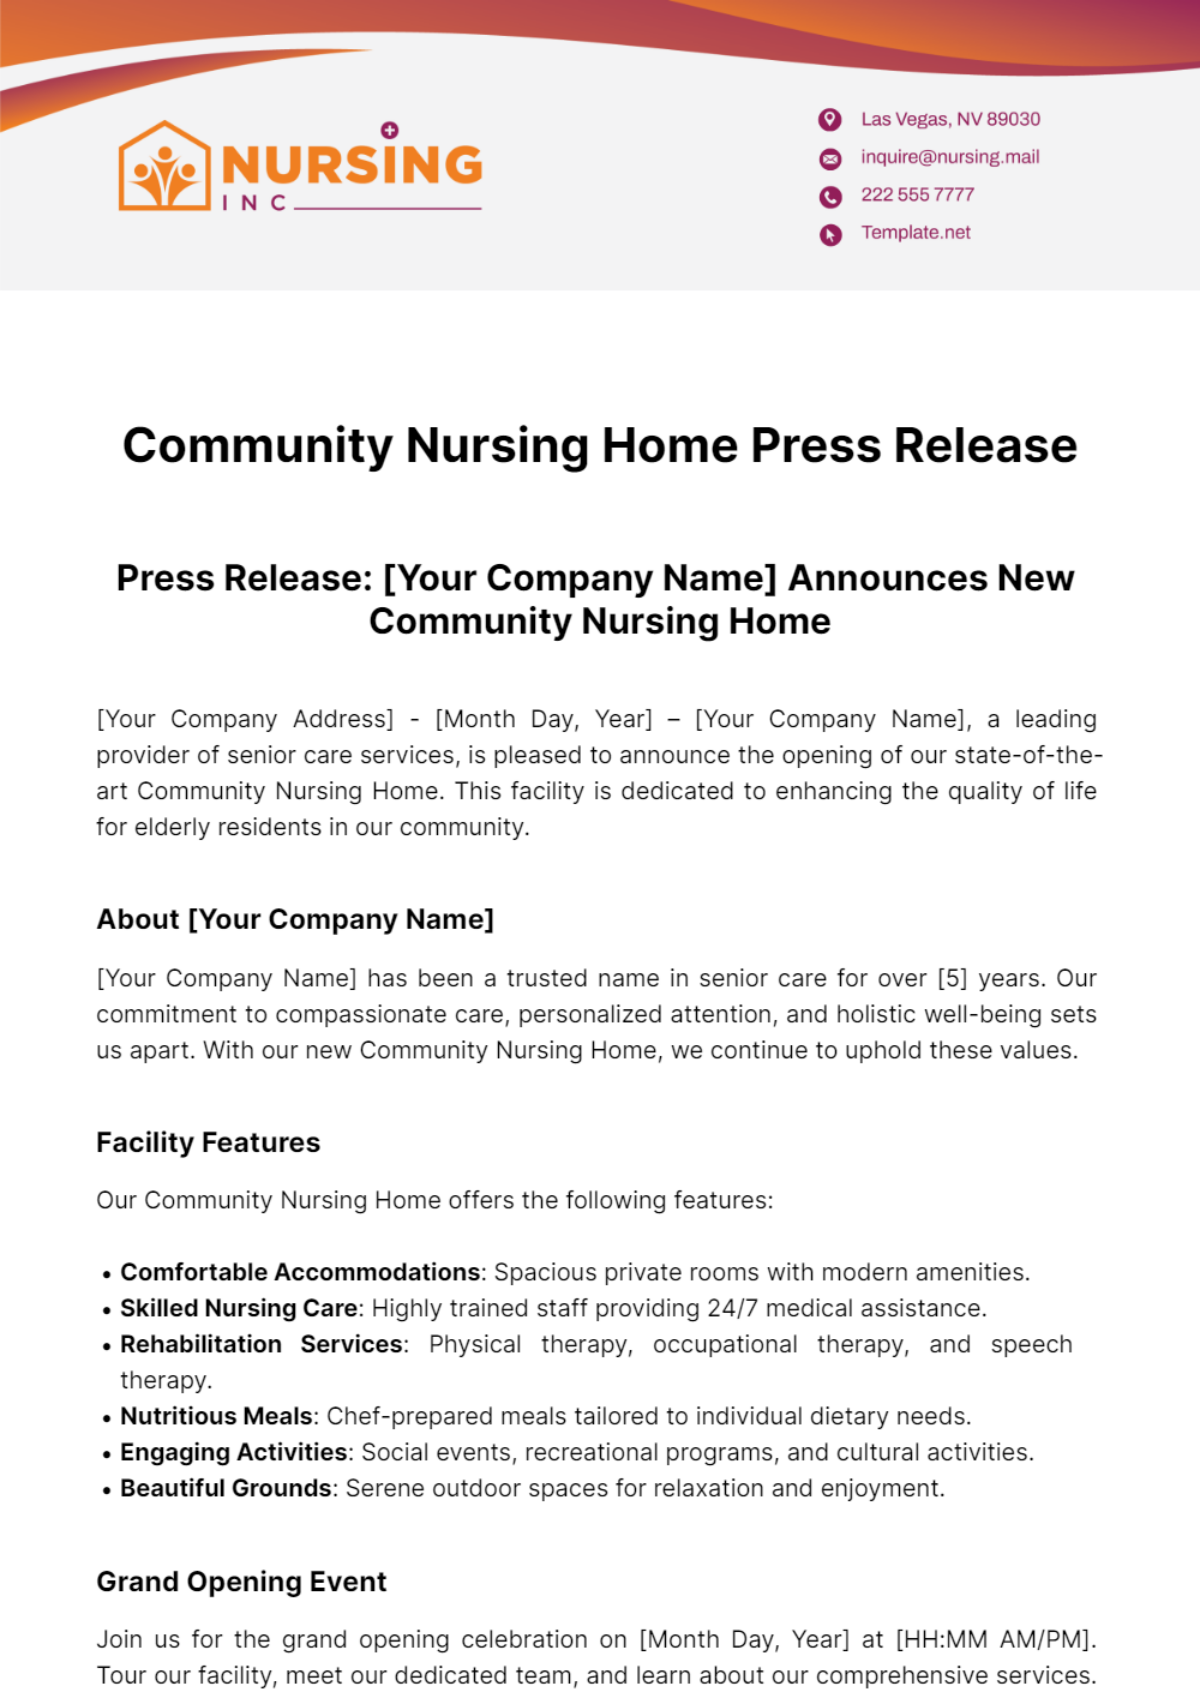 Community Nursing Home Press Release Template